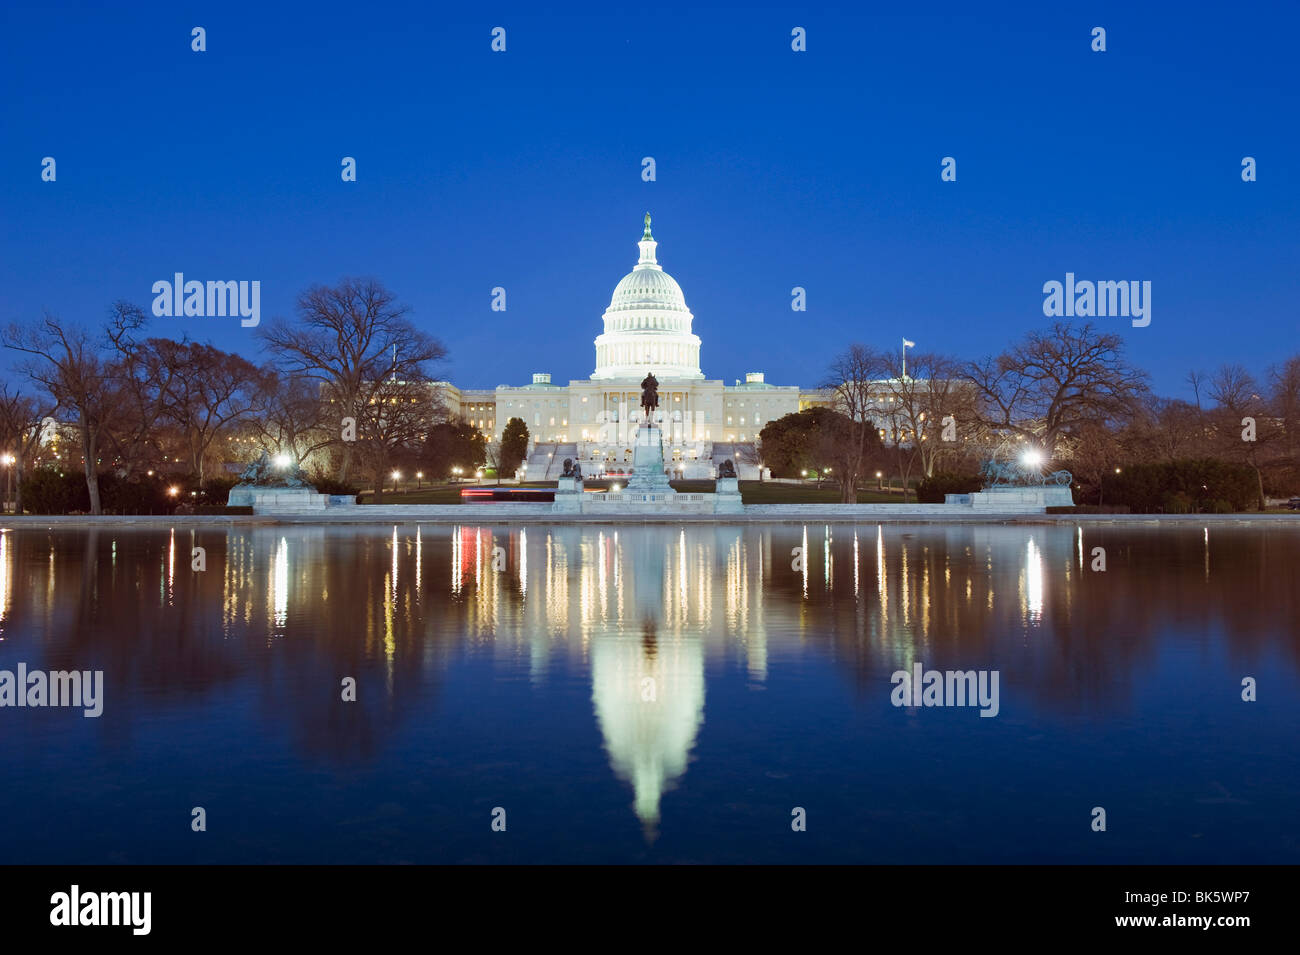 Das Kapitol, Capitol Hill, Washington D.C., Vereinigte Staaten von Amerika, Nordamerika Stockfoto